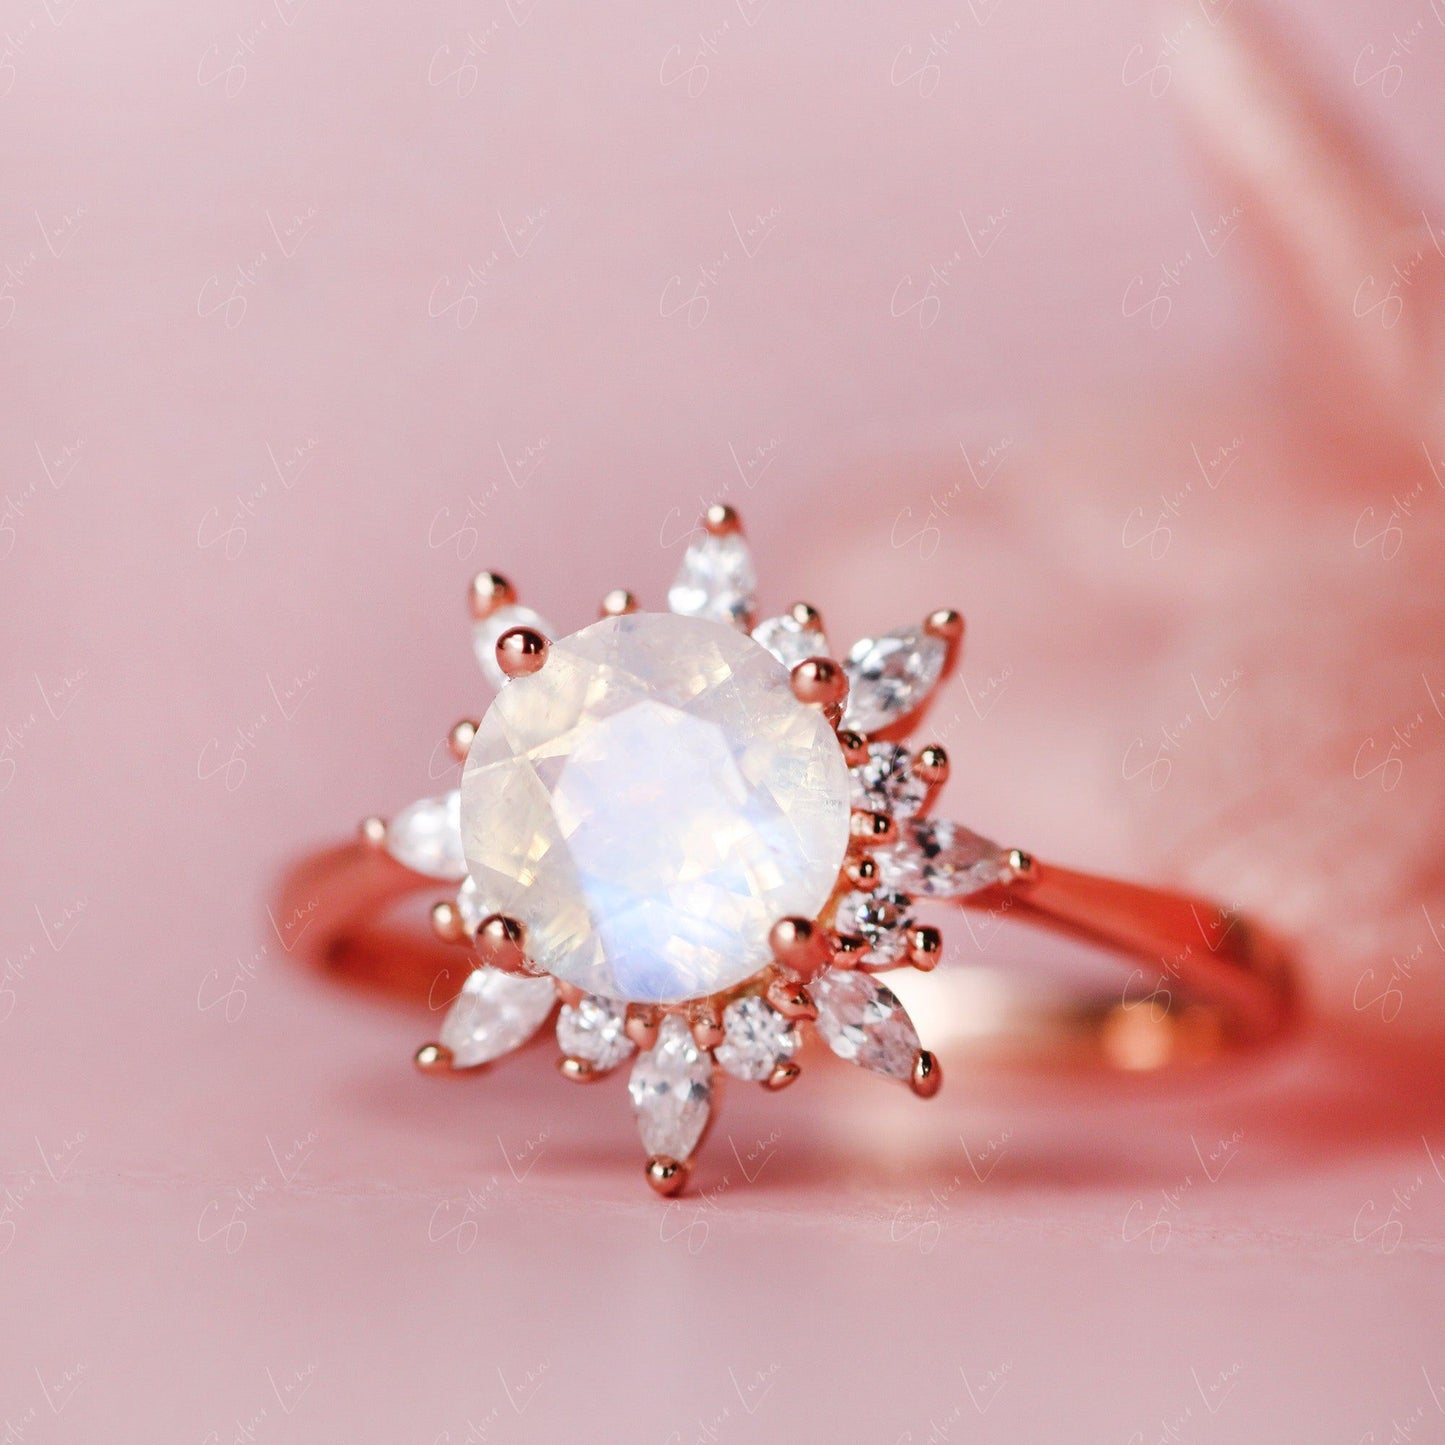 Moonstone halo engagement ring